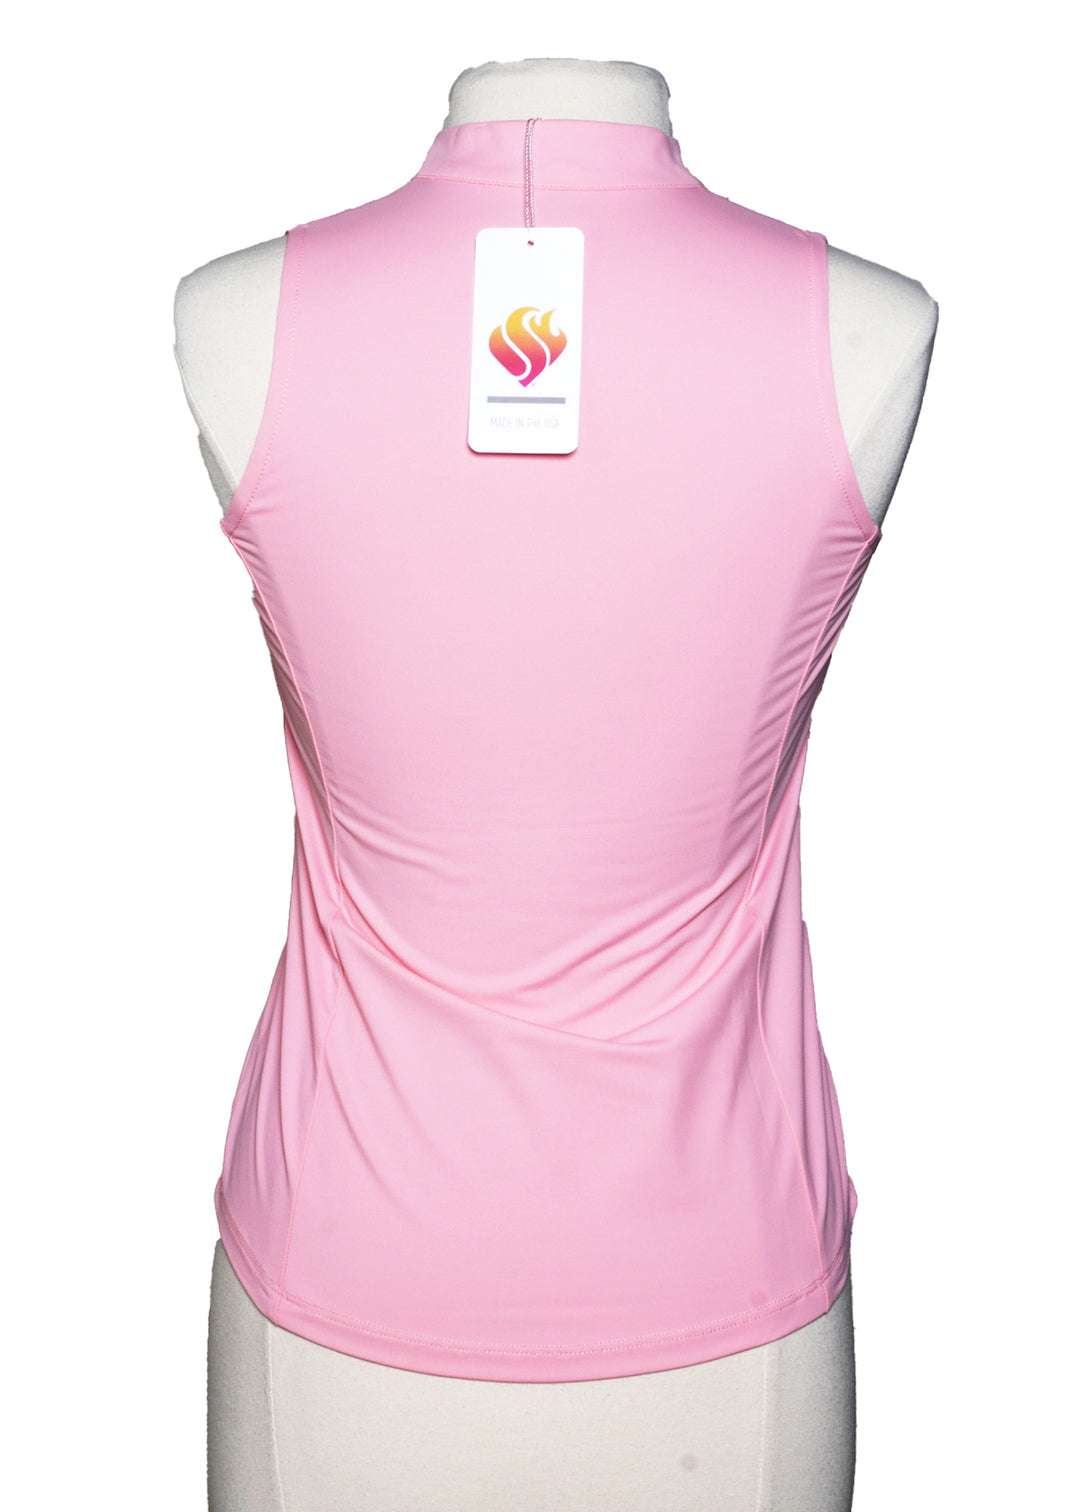 Amy Sport Frontline Sleeveless Silver Zip Top - Light Pink - Size X-Small - Skorzie